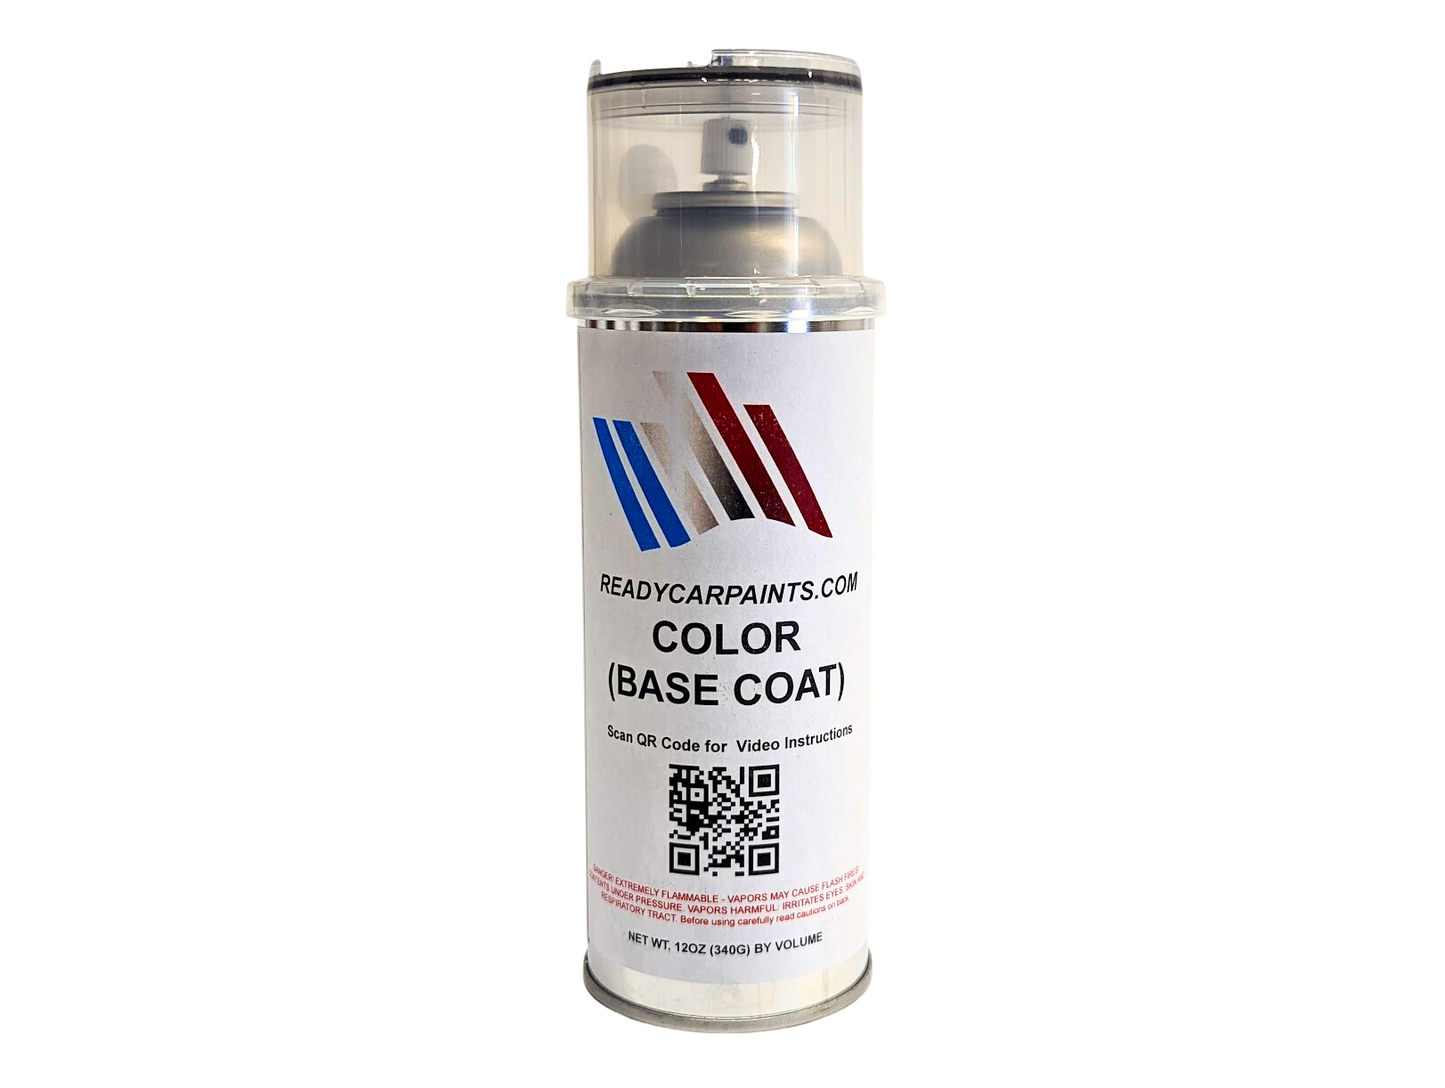 SUZUKI 68U Melange Beige Metallic Automotive Spray Paint 100% OEM Color Match